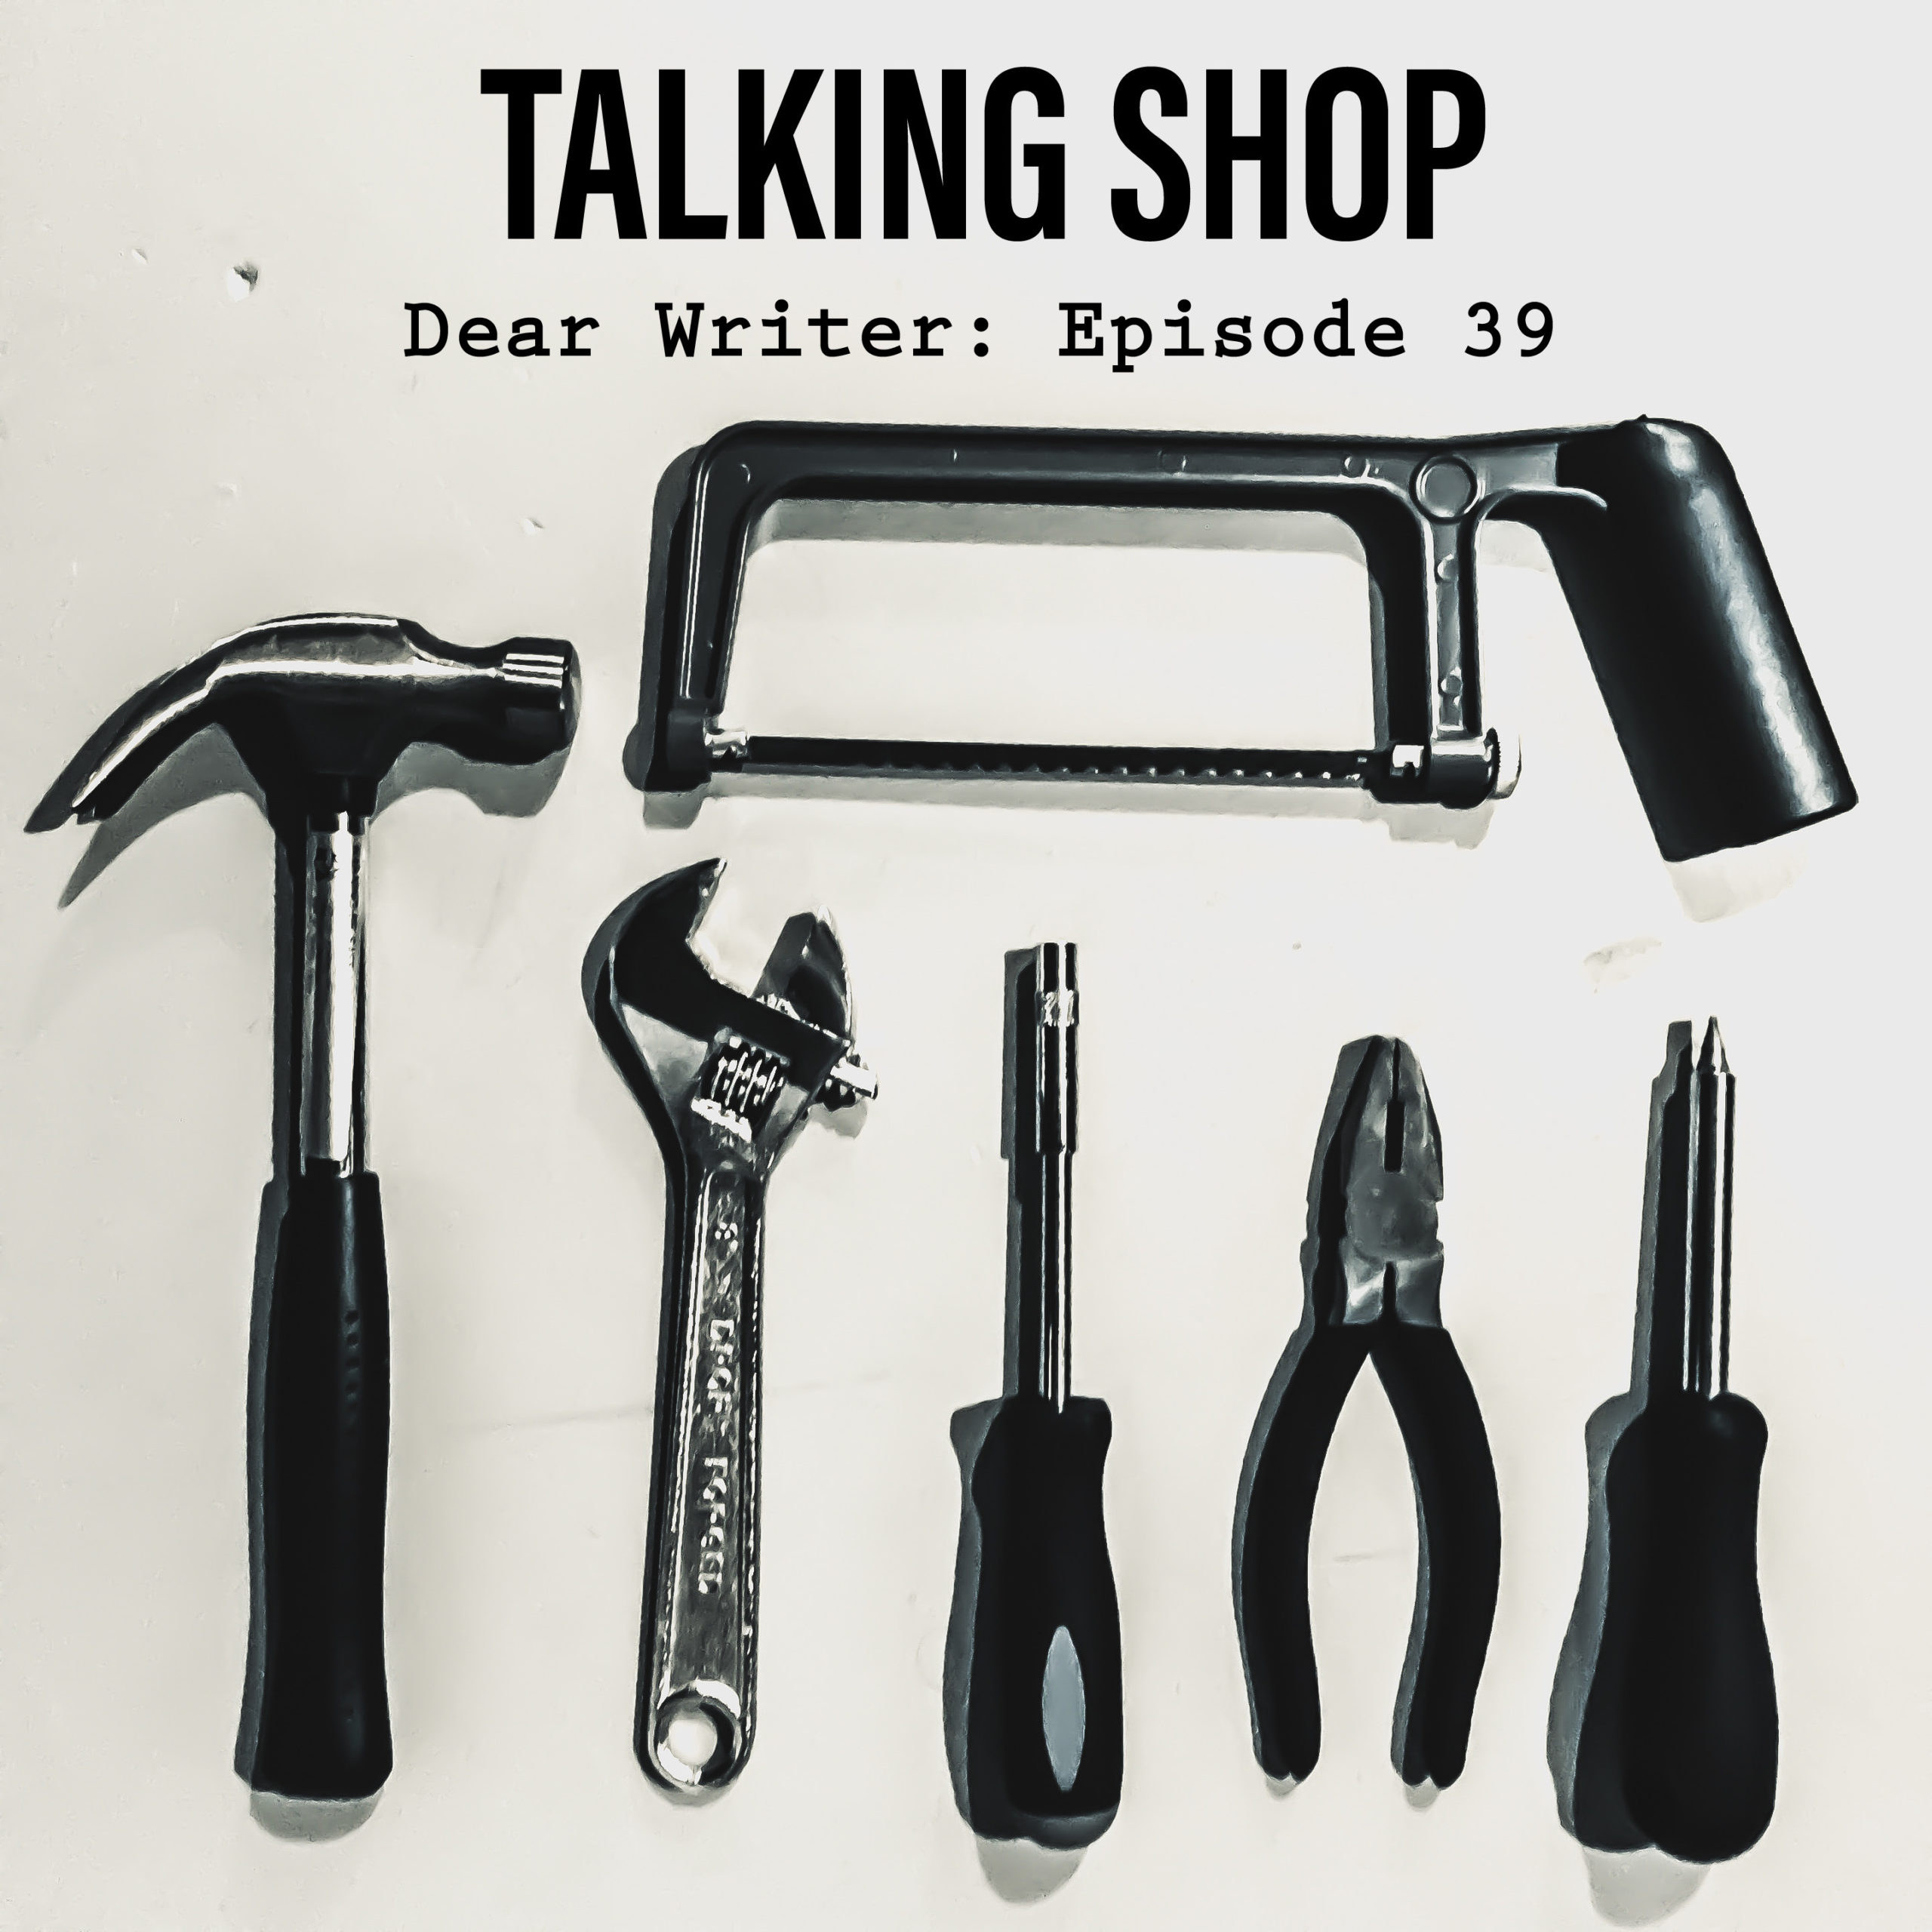 Dear Writer Episode 39 Talking Shop: Analyzing the Dystopian Teen Fiction Genre and YouTube Channel 'Outstanding Screenplays'